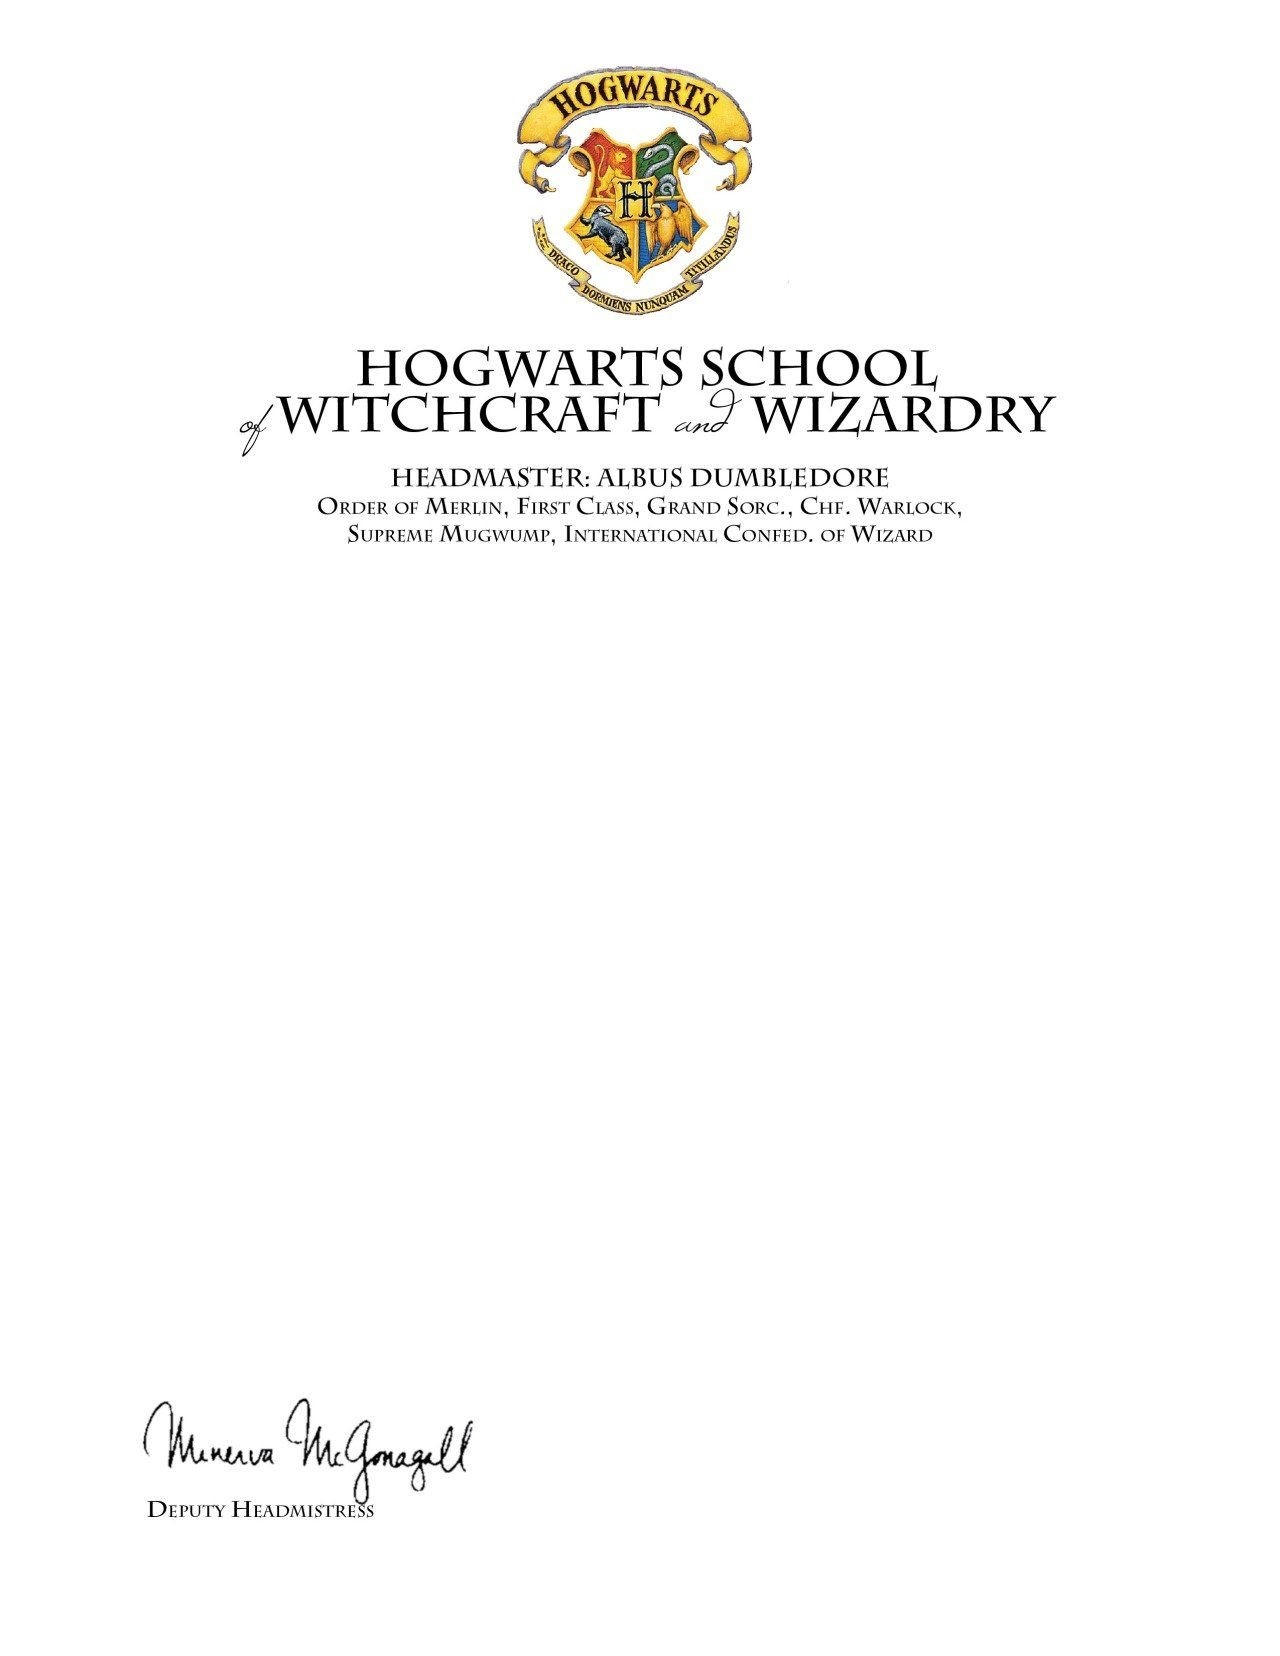 Harry Potter Invitation Letter Template - Hogwarts Letter Template Free New Harry Potter Hogwarts Acceptance